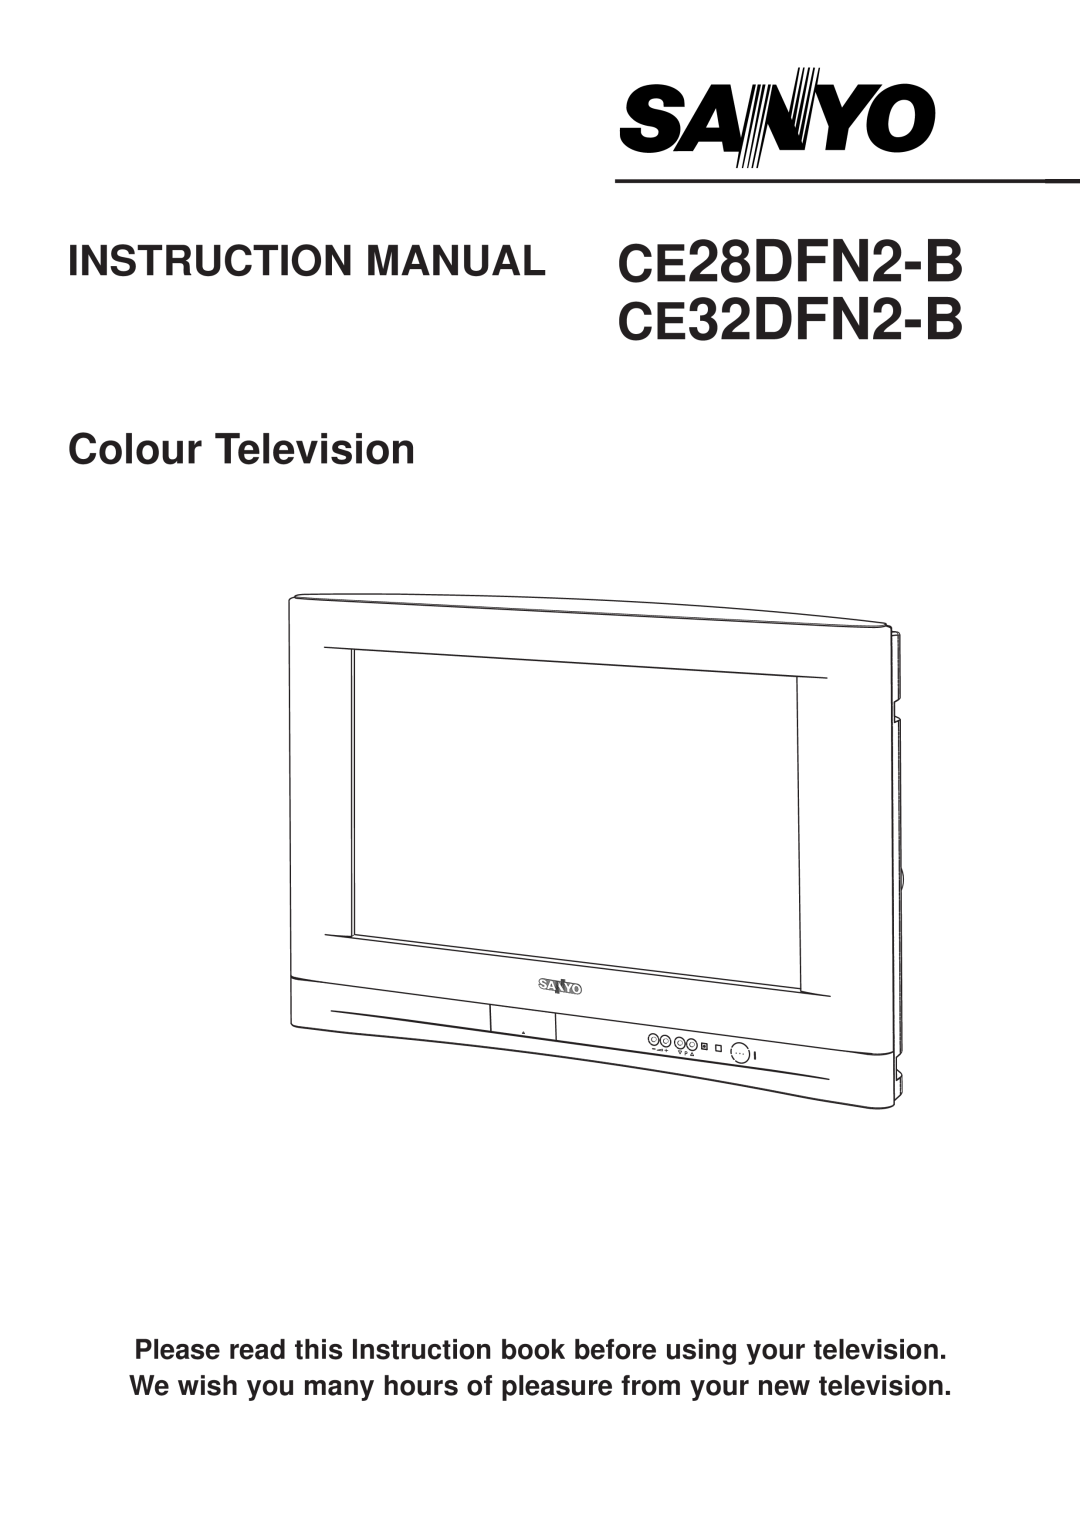 Sanyo instruction manual CE28DFN2-B CE32DFN2-B, INSTRUCTION MANUAL Colour Television 